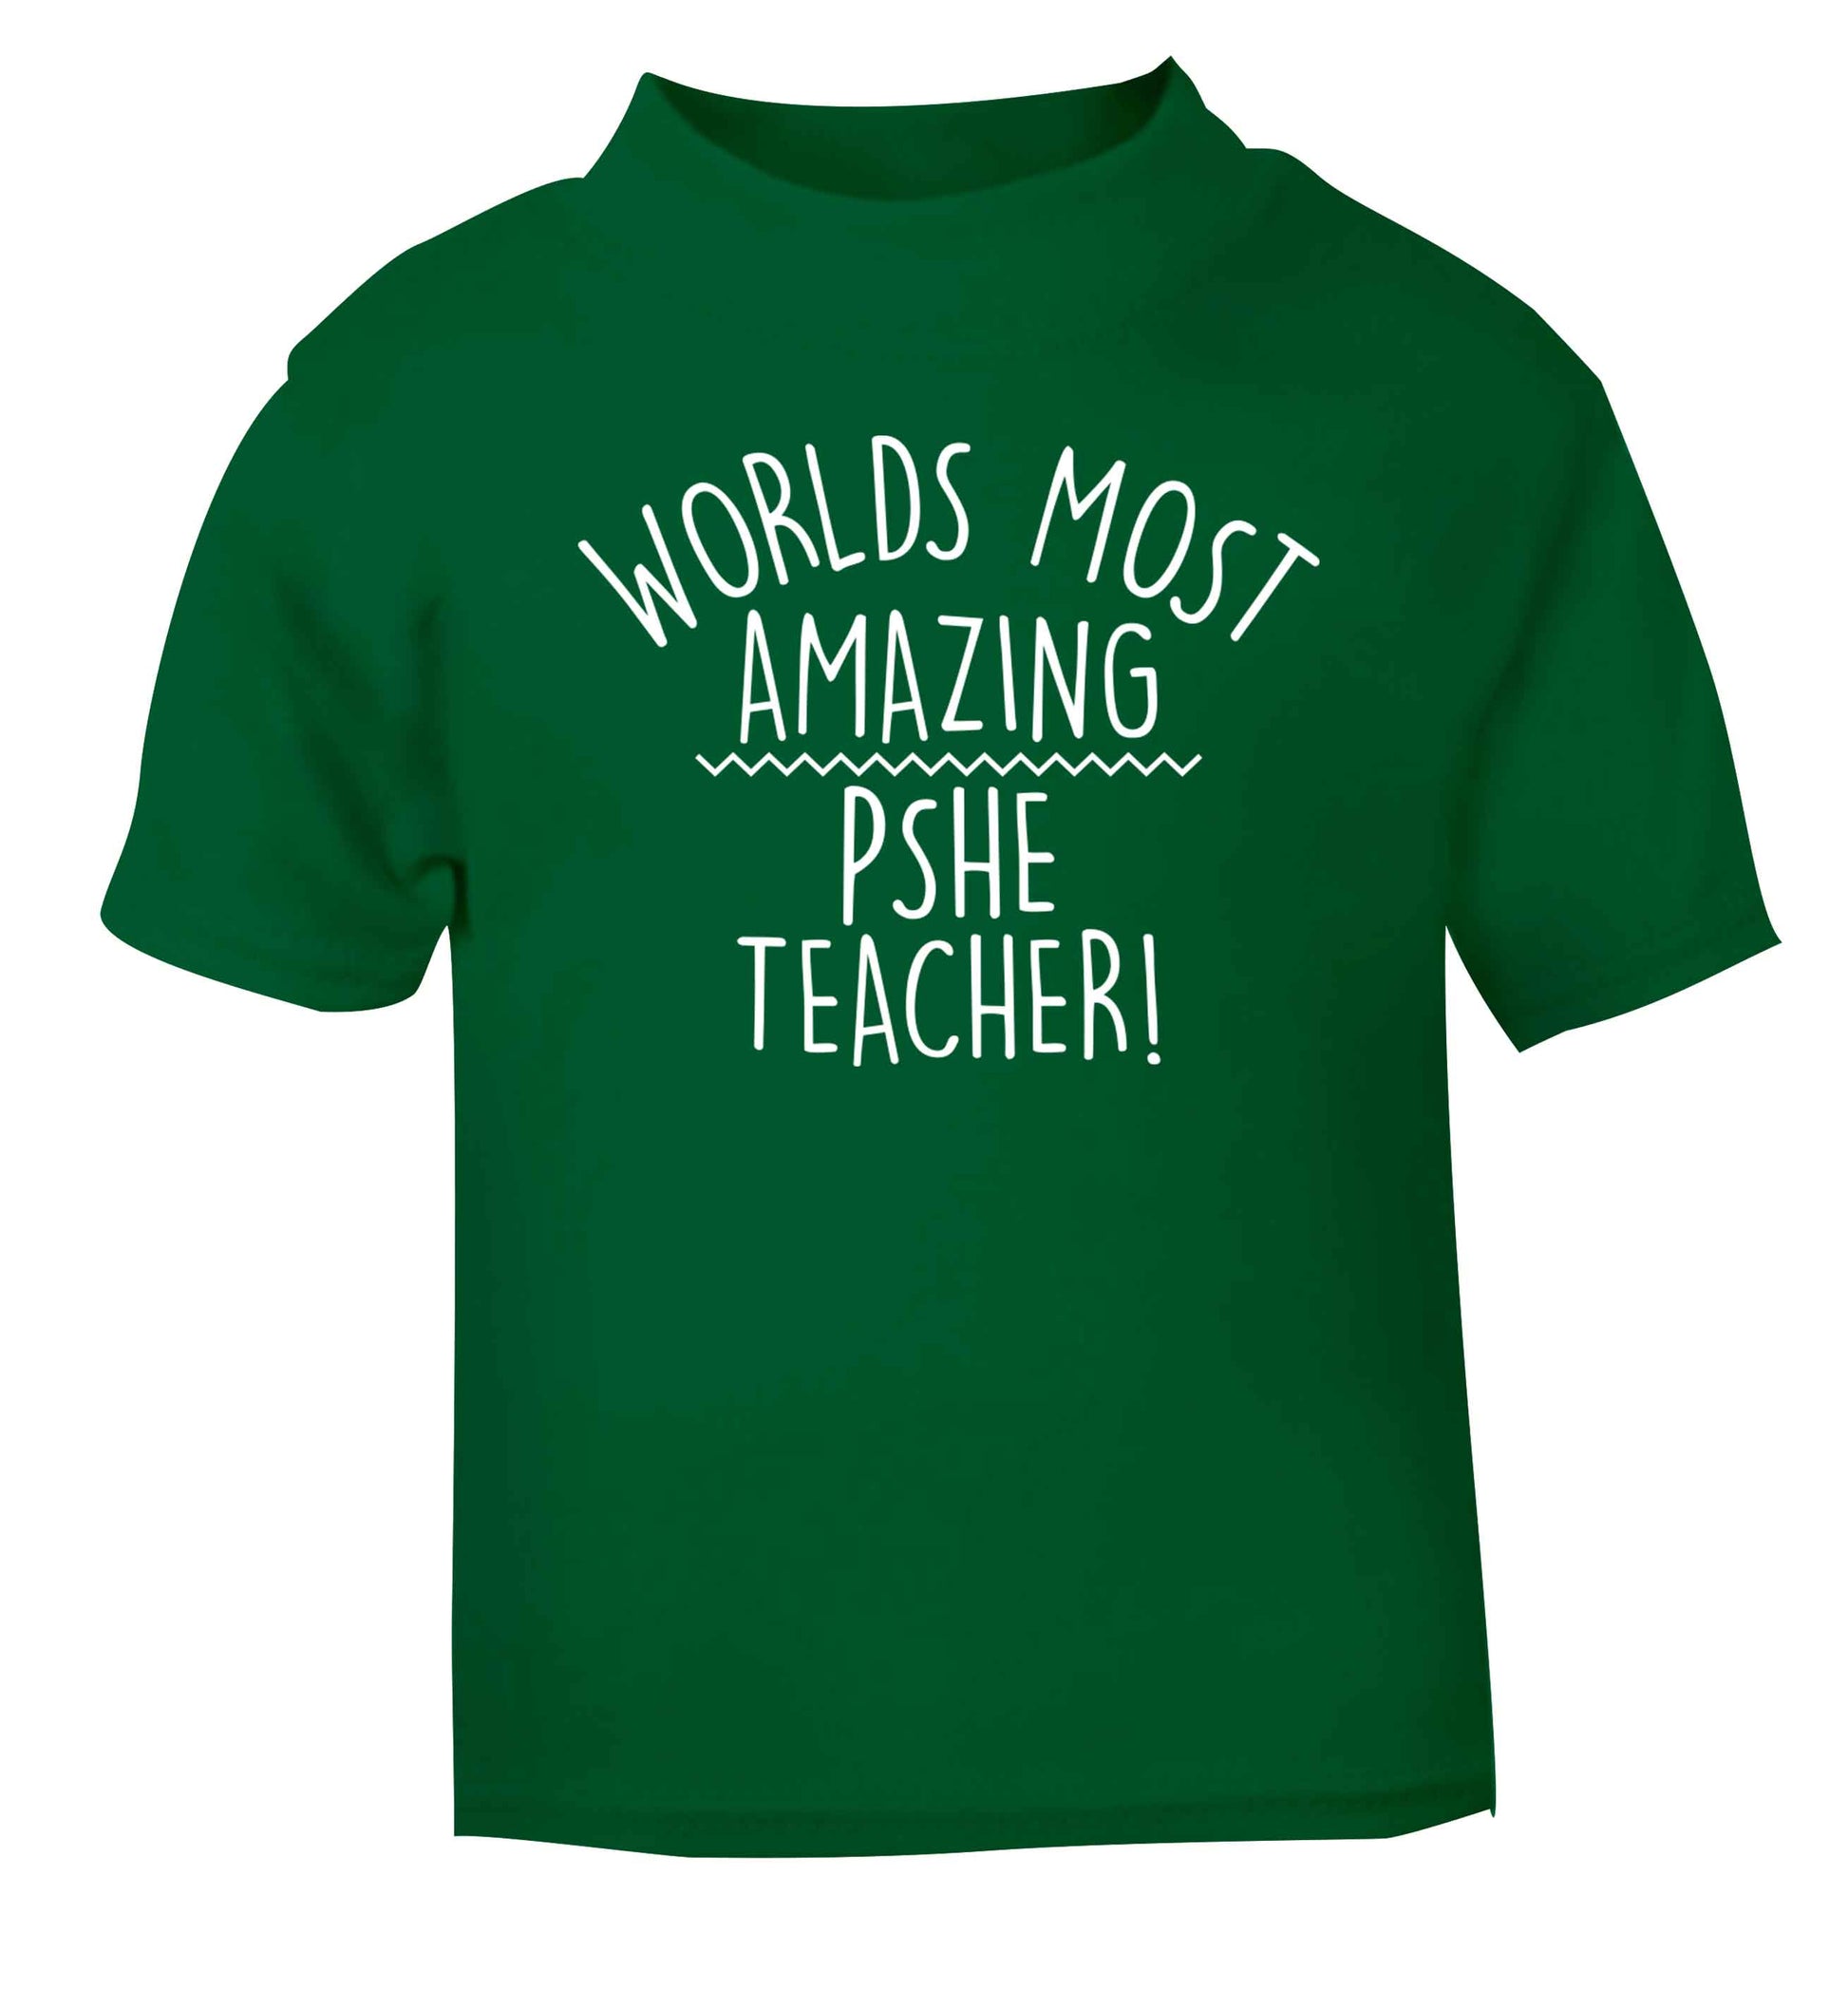 Worlds most amazing PHSE teacher green baby toddler Tshirt 2 Years